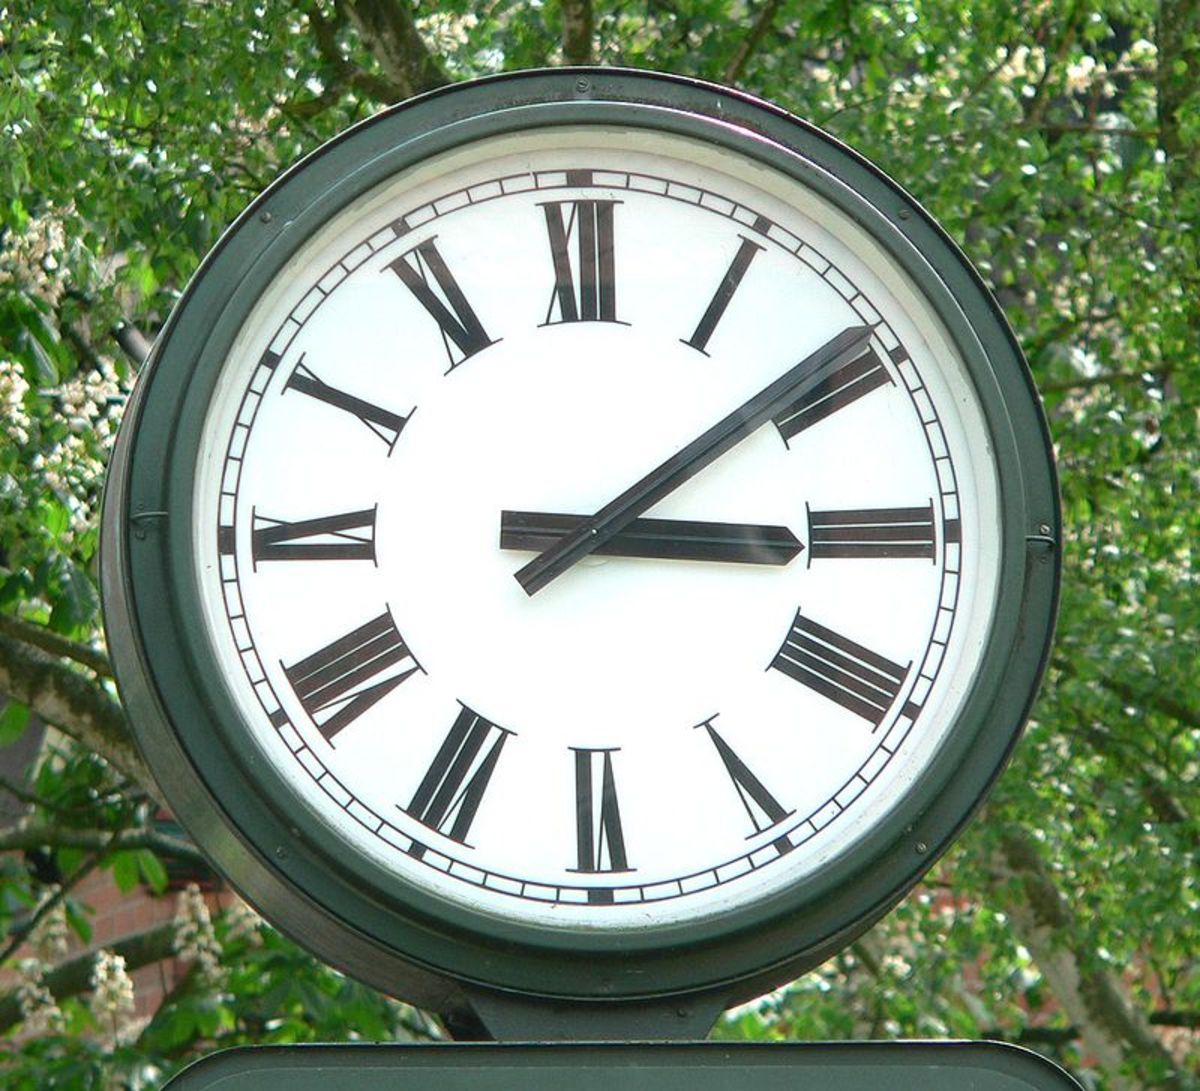 Clock in Bad Salzdetfurth, Germany, Badenburger Strasse